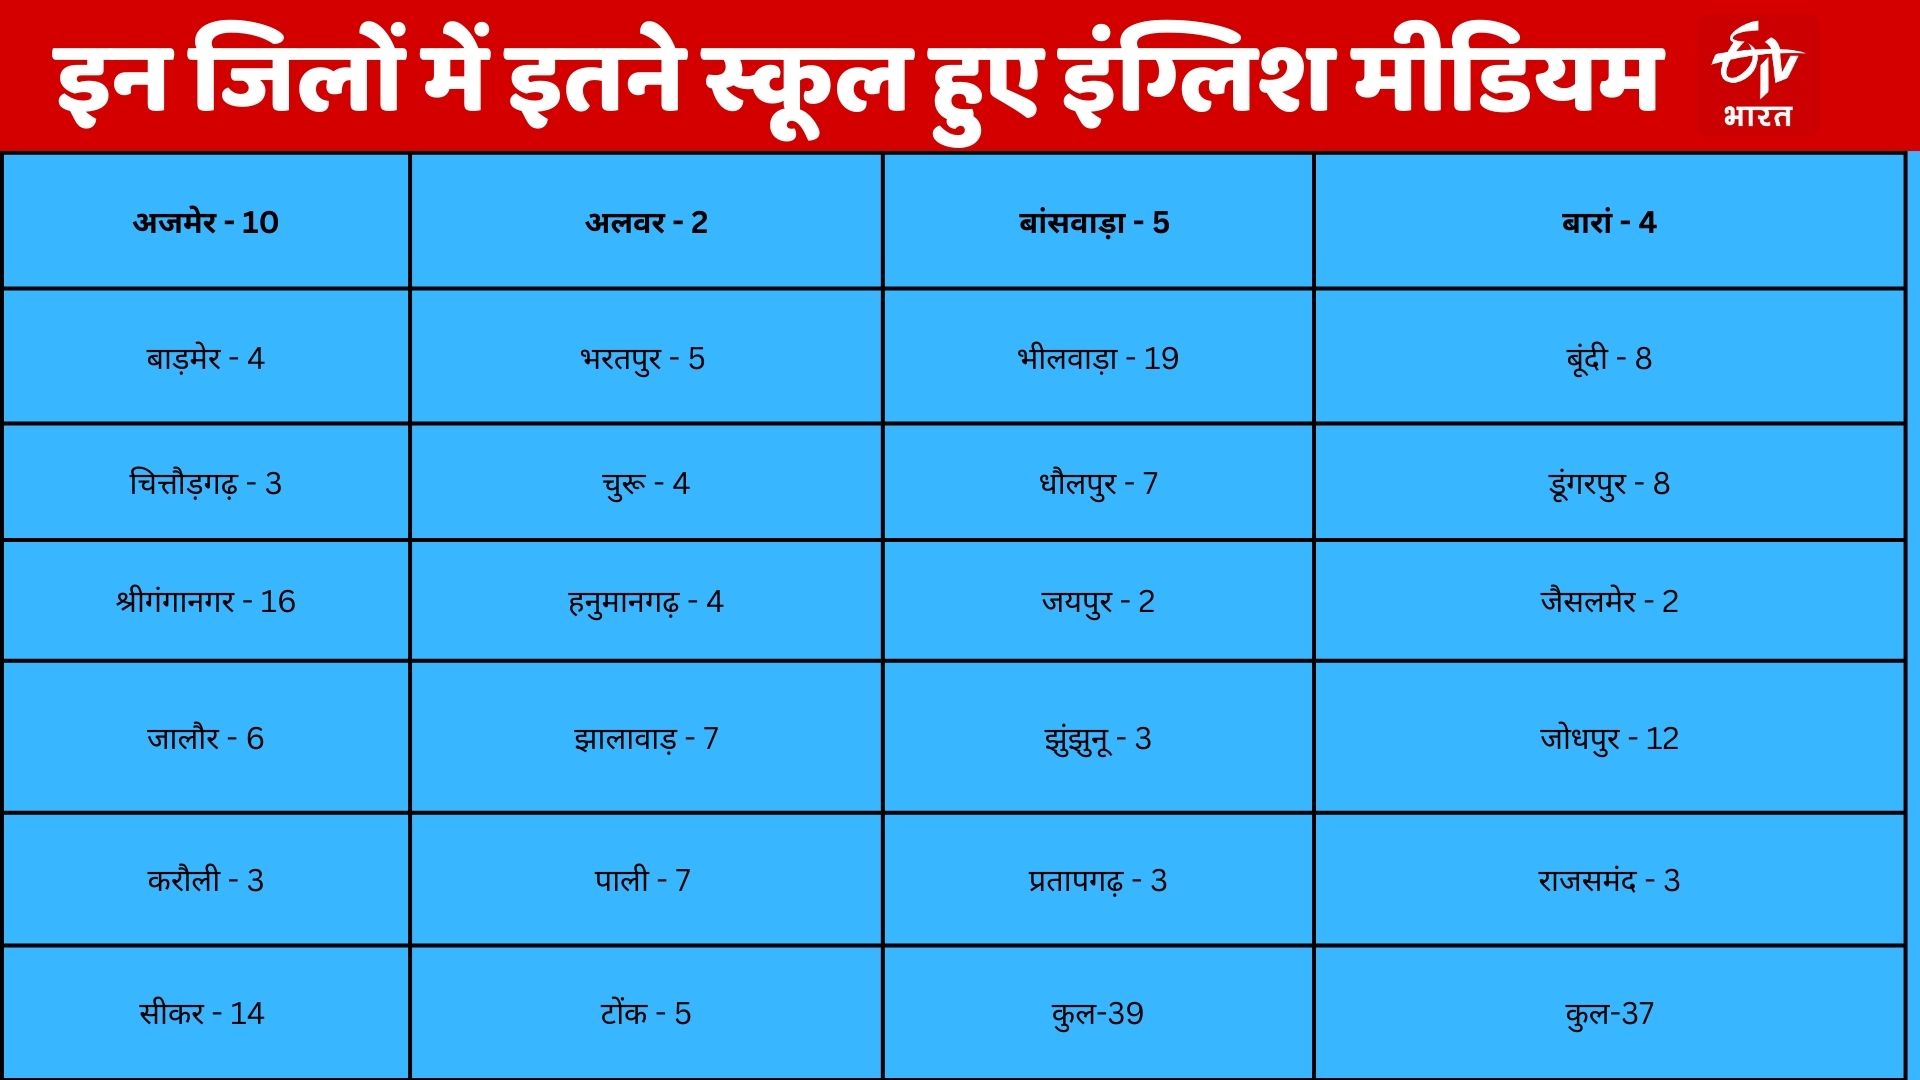 Hindi medium schools in rajasthan